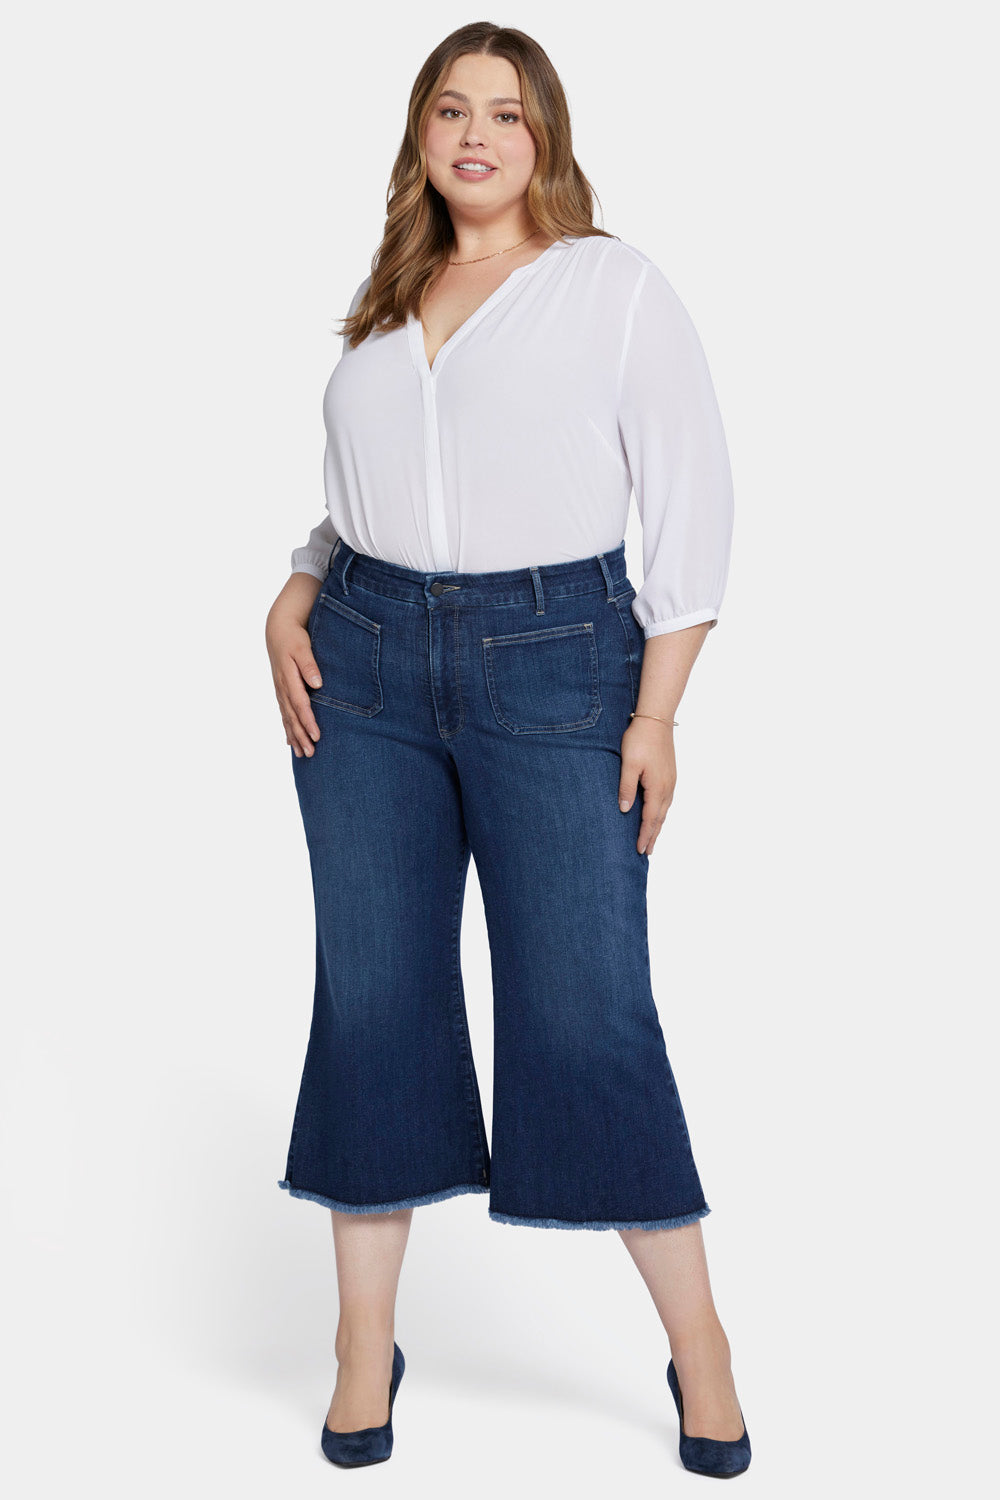 Women's Plus Size Crops and Capri Jeans – NYDJ Apparel